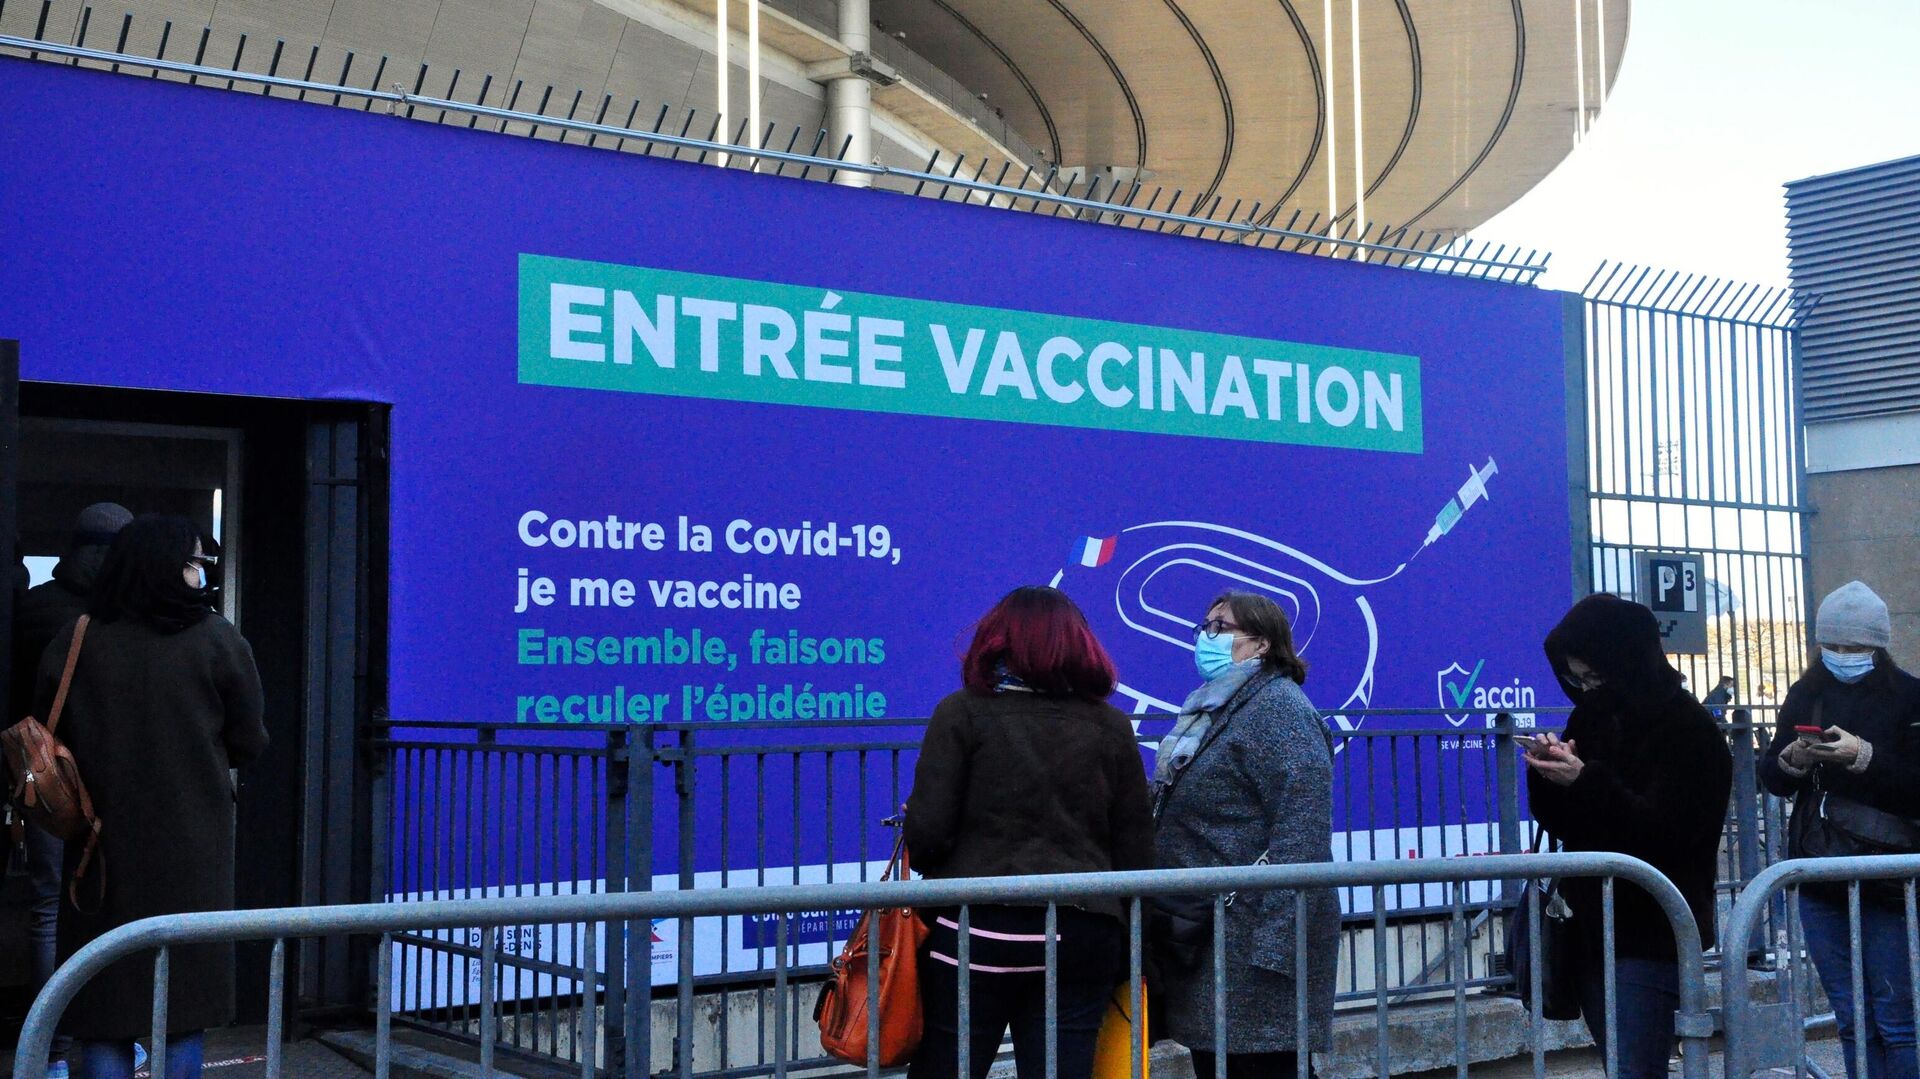 Местные жители стоят в очереди на вакцинацию от коронавируса в центре вакцинодроме на стадионе Стад де Франс - РИА Новости, 1920, 28.05.2021